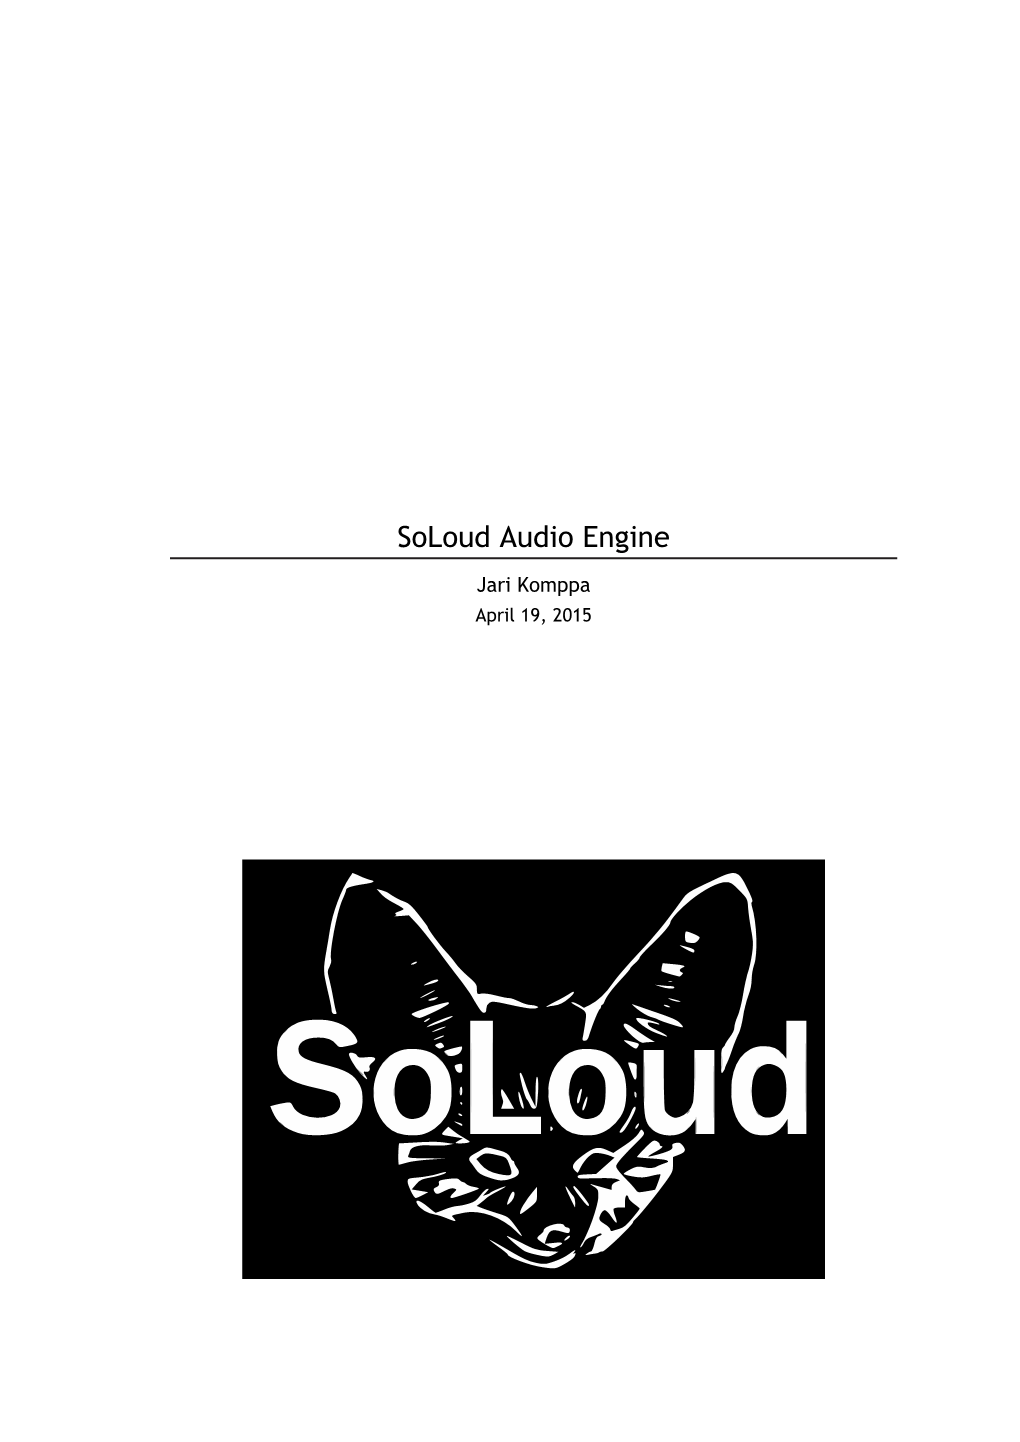 Soloud Audio Engine